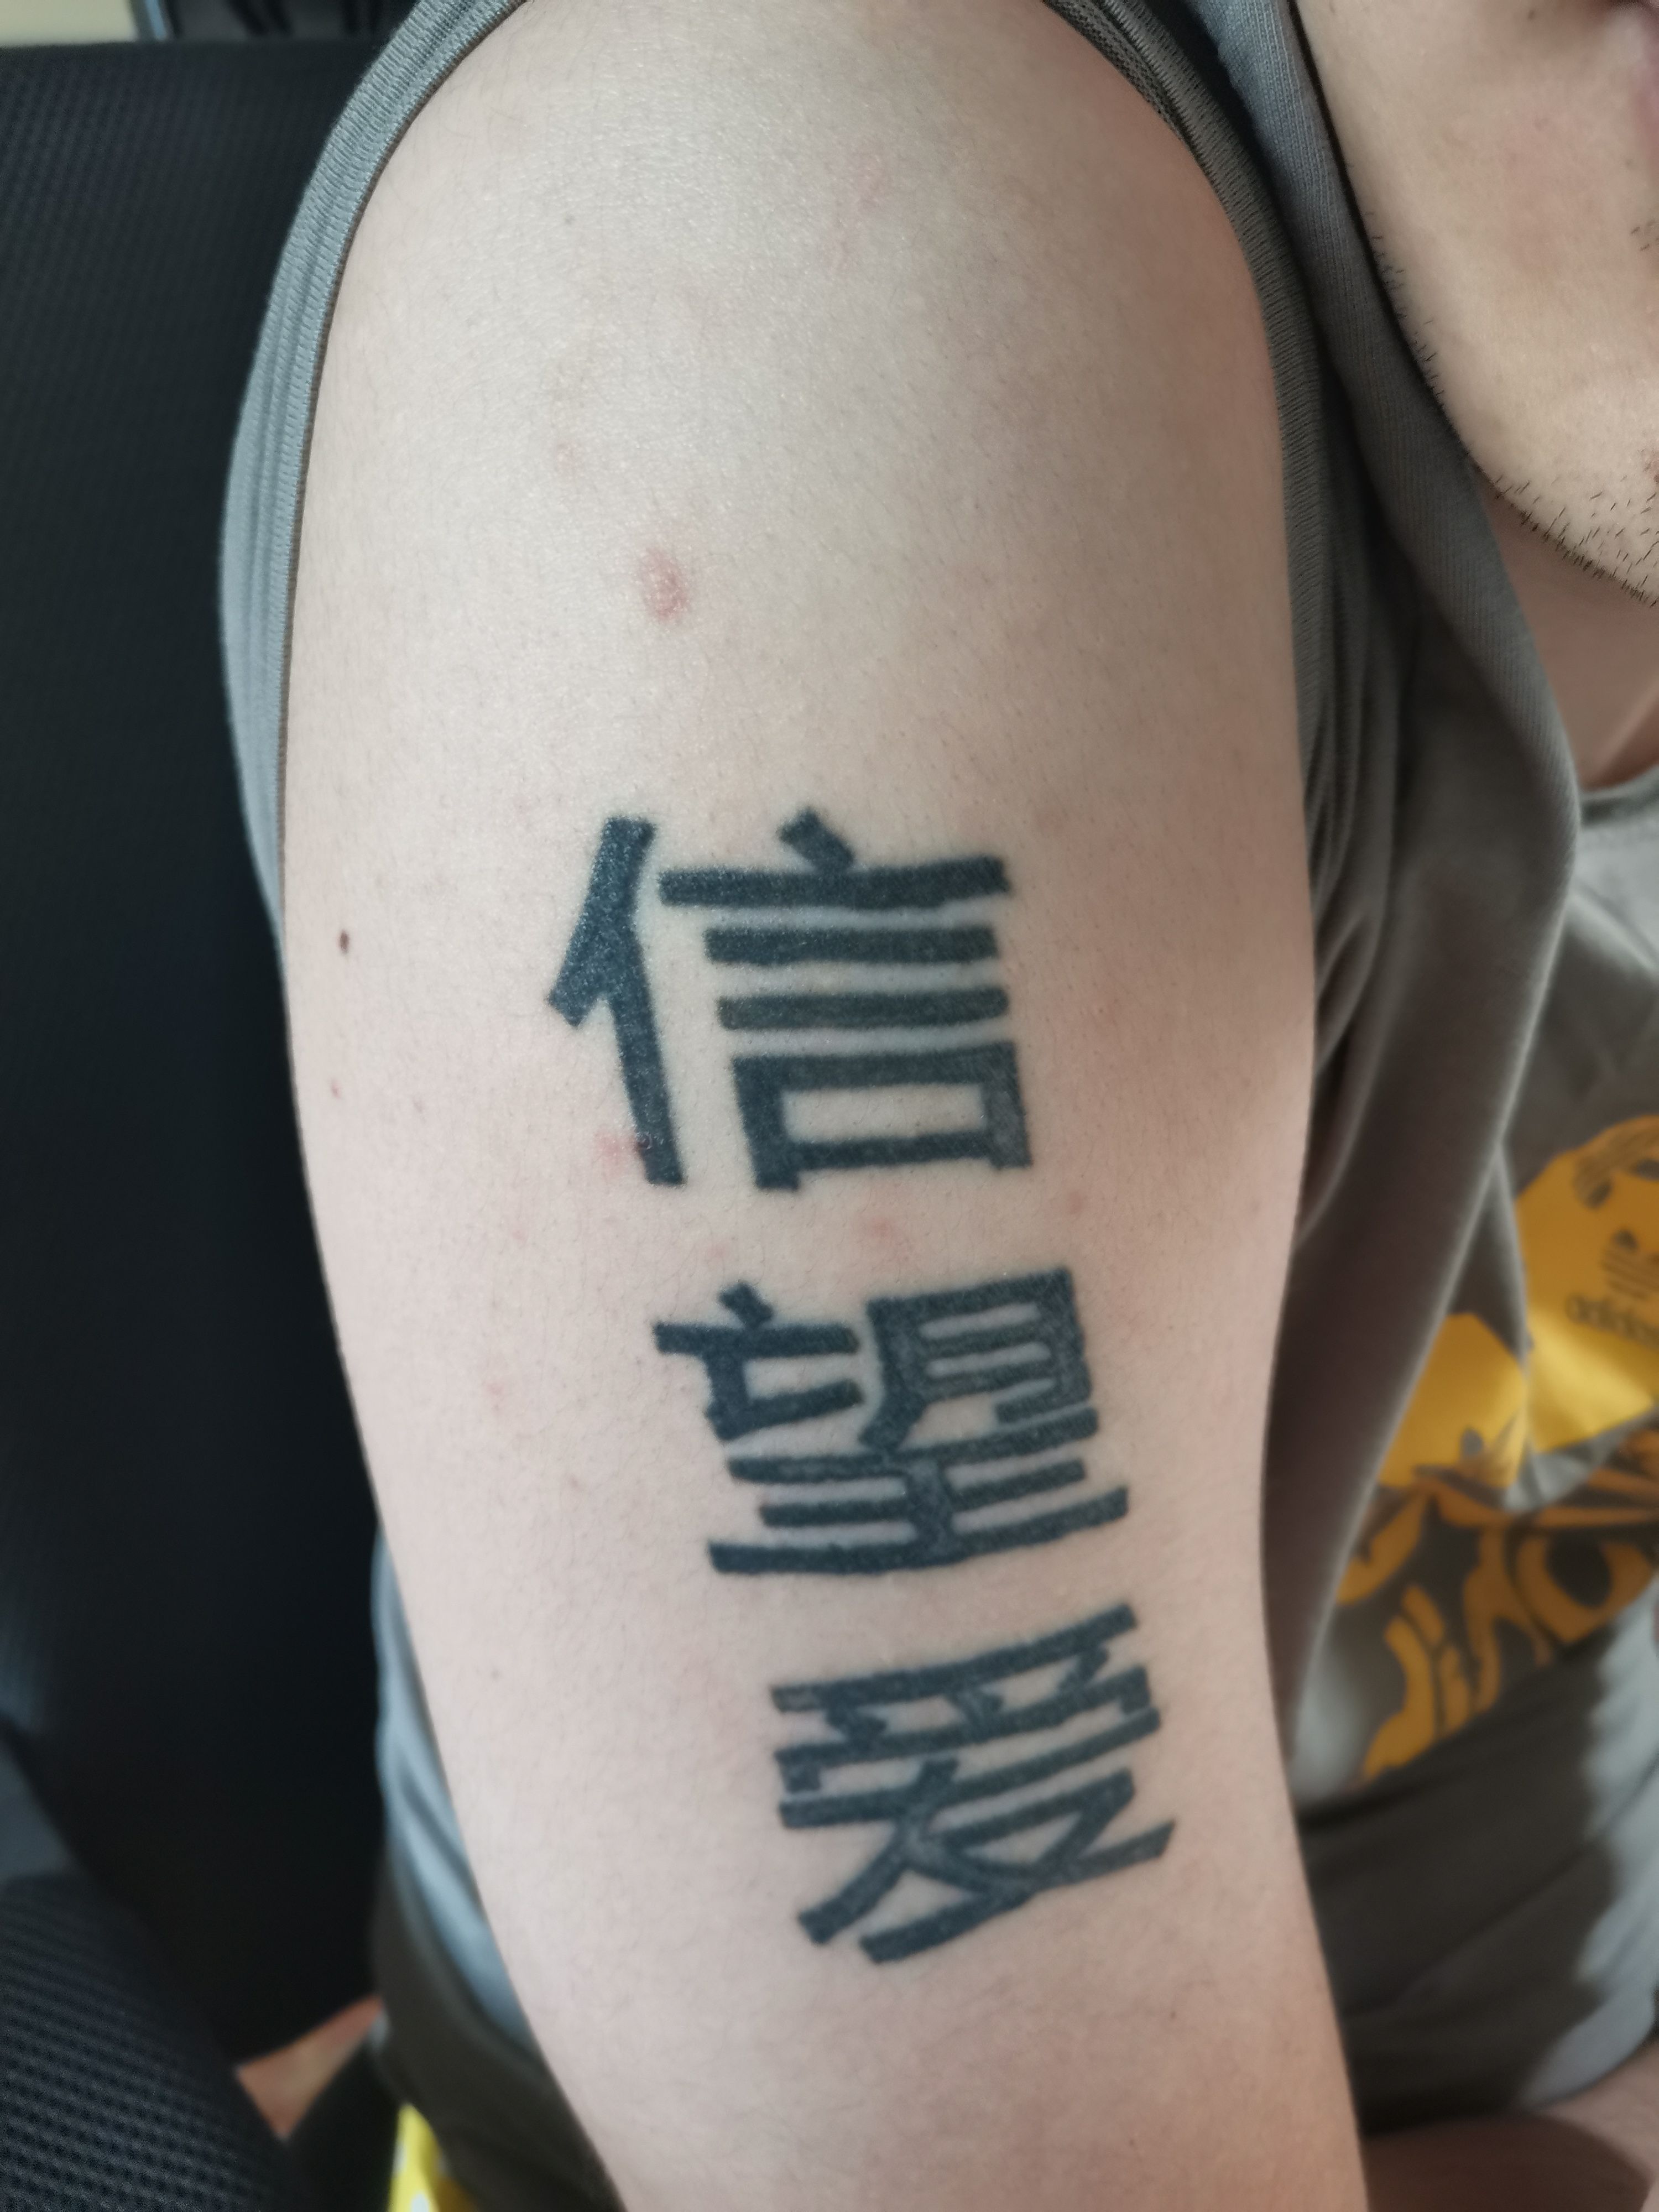 6sheets Chinese Words Temporary Tattoo Waterproof | eBay